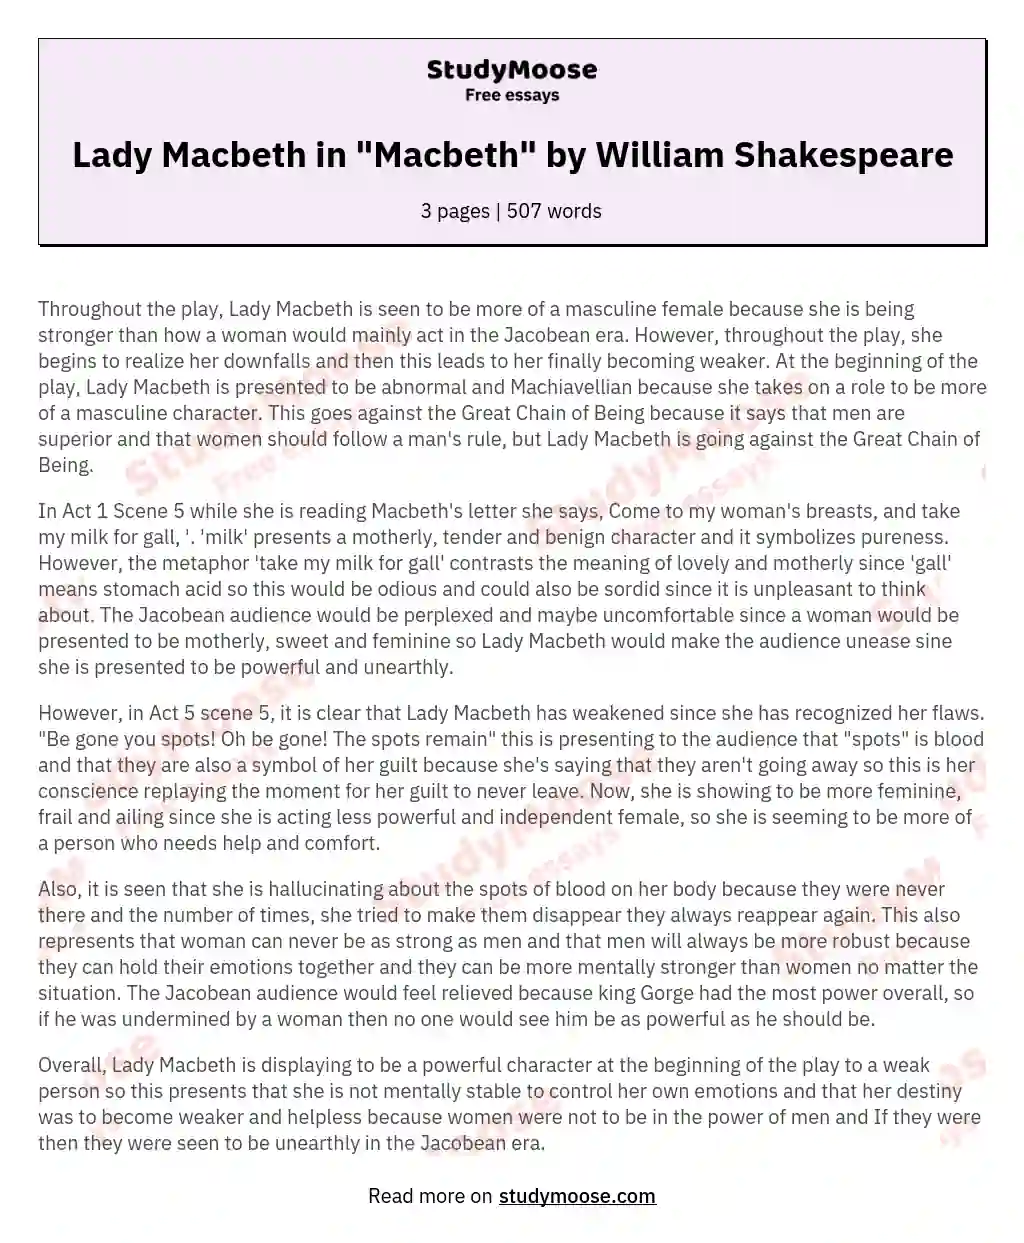 Lady Macbeth in "Macbeth" by William Shakespeare essay